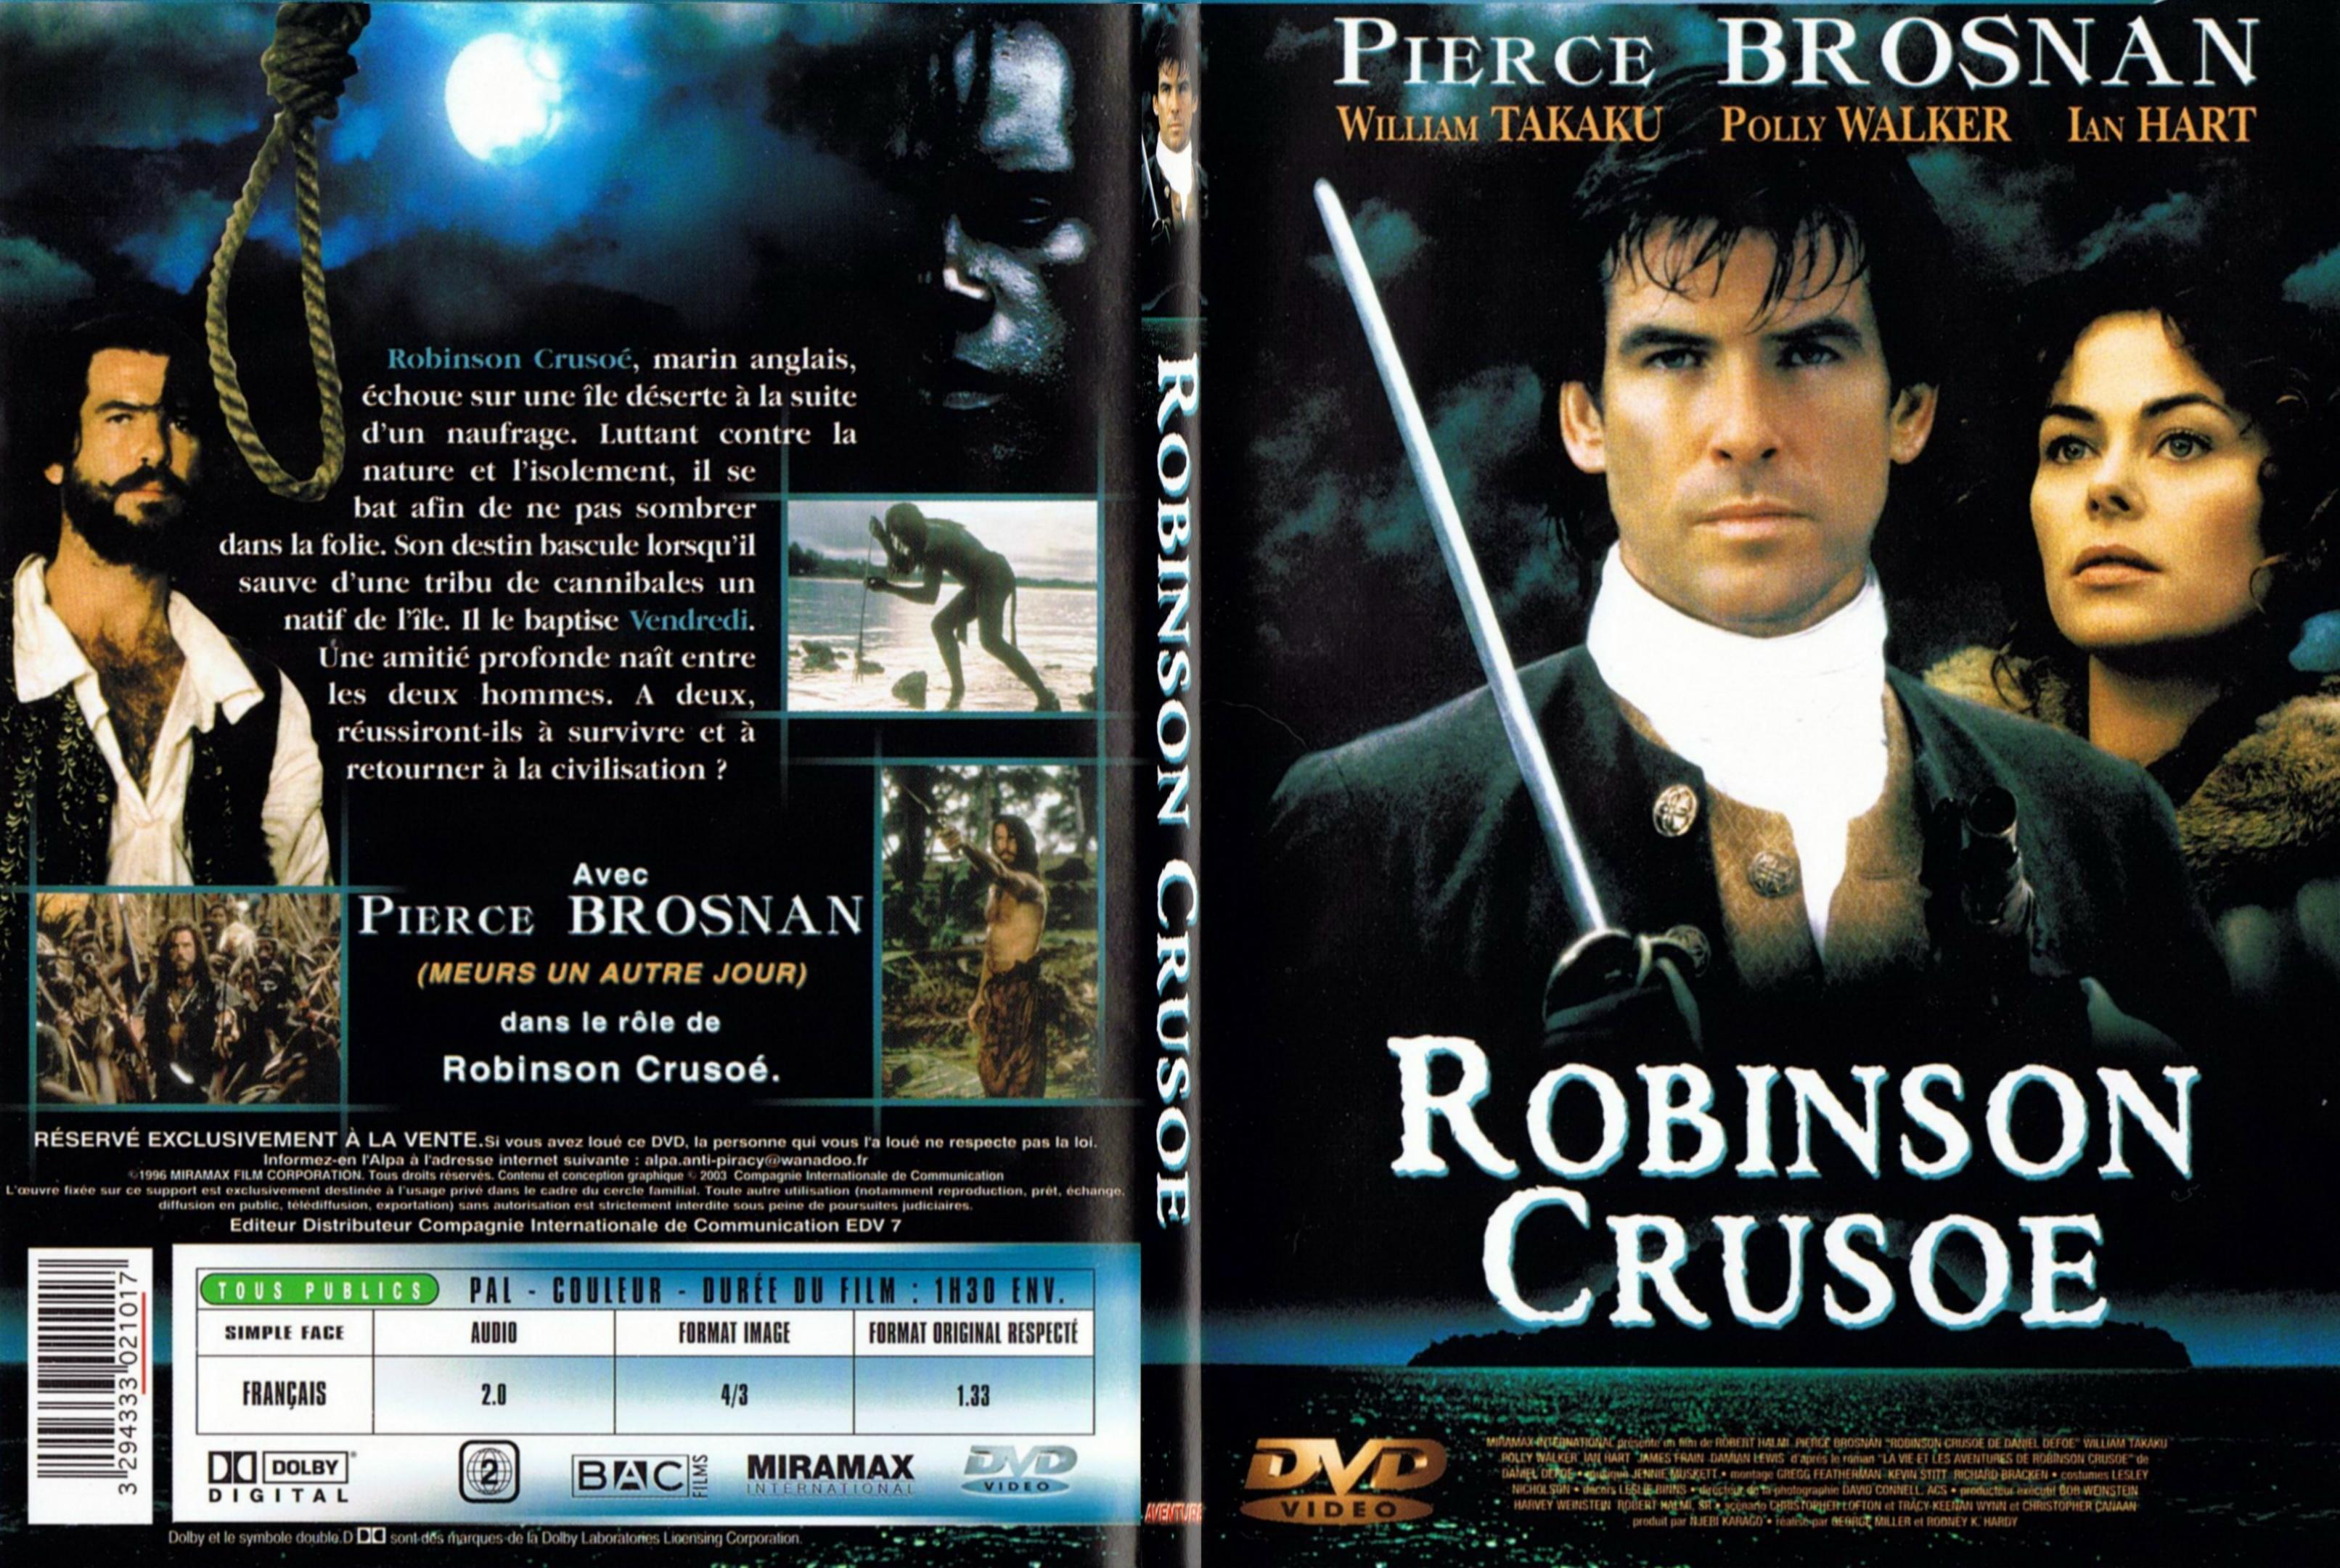 Jaquette DVD Robinson Crusoe (Pierce Brosnan) - SLIM